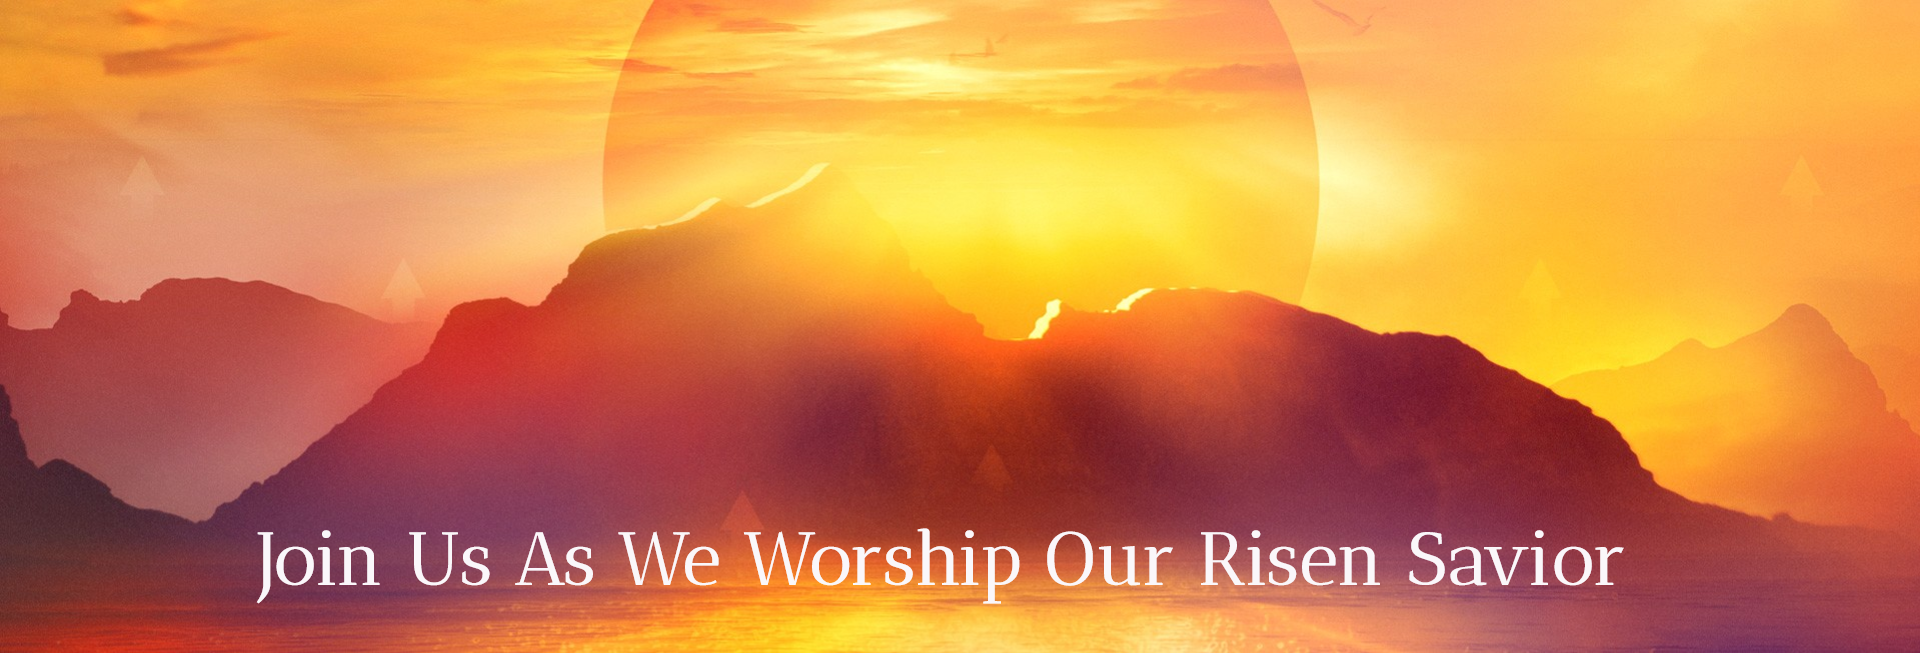 Hope Rises Church Website Banner